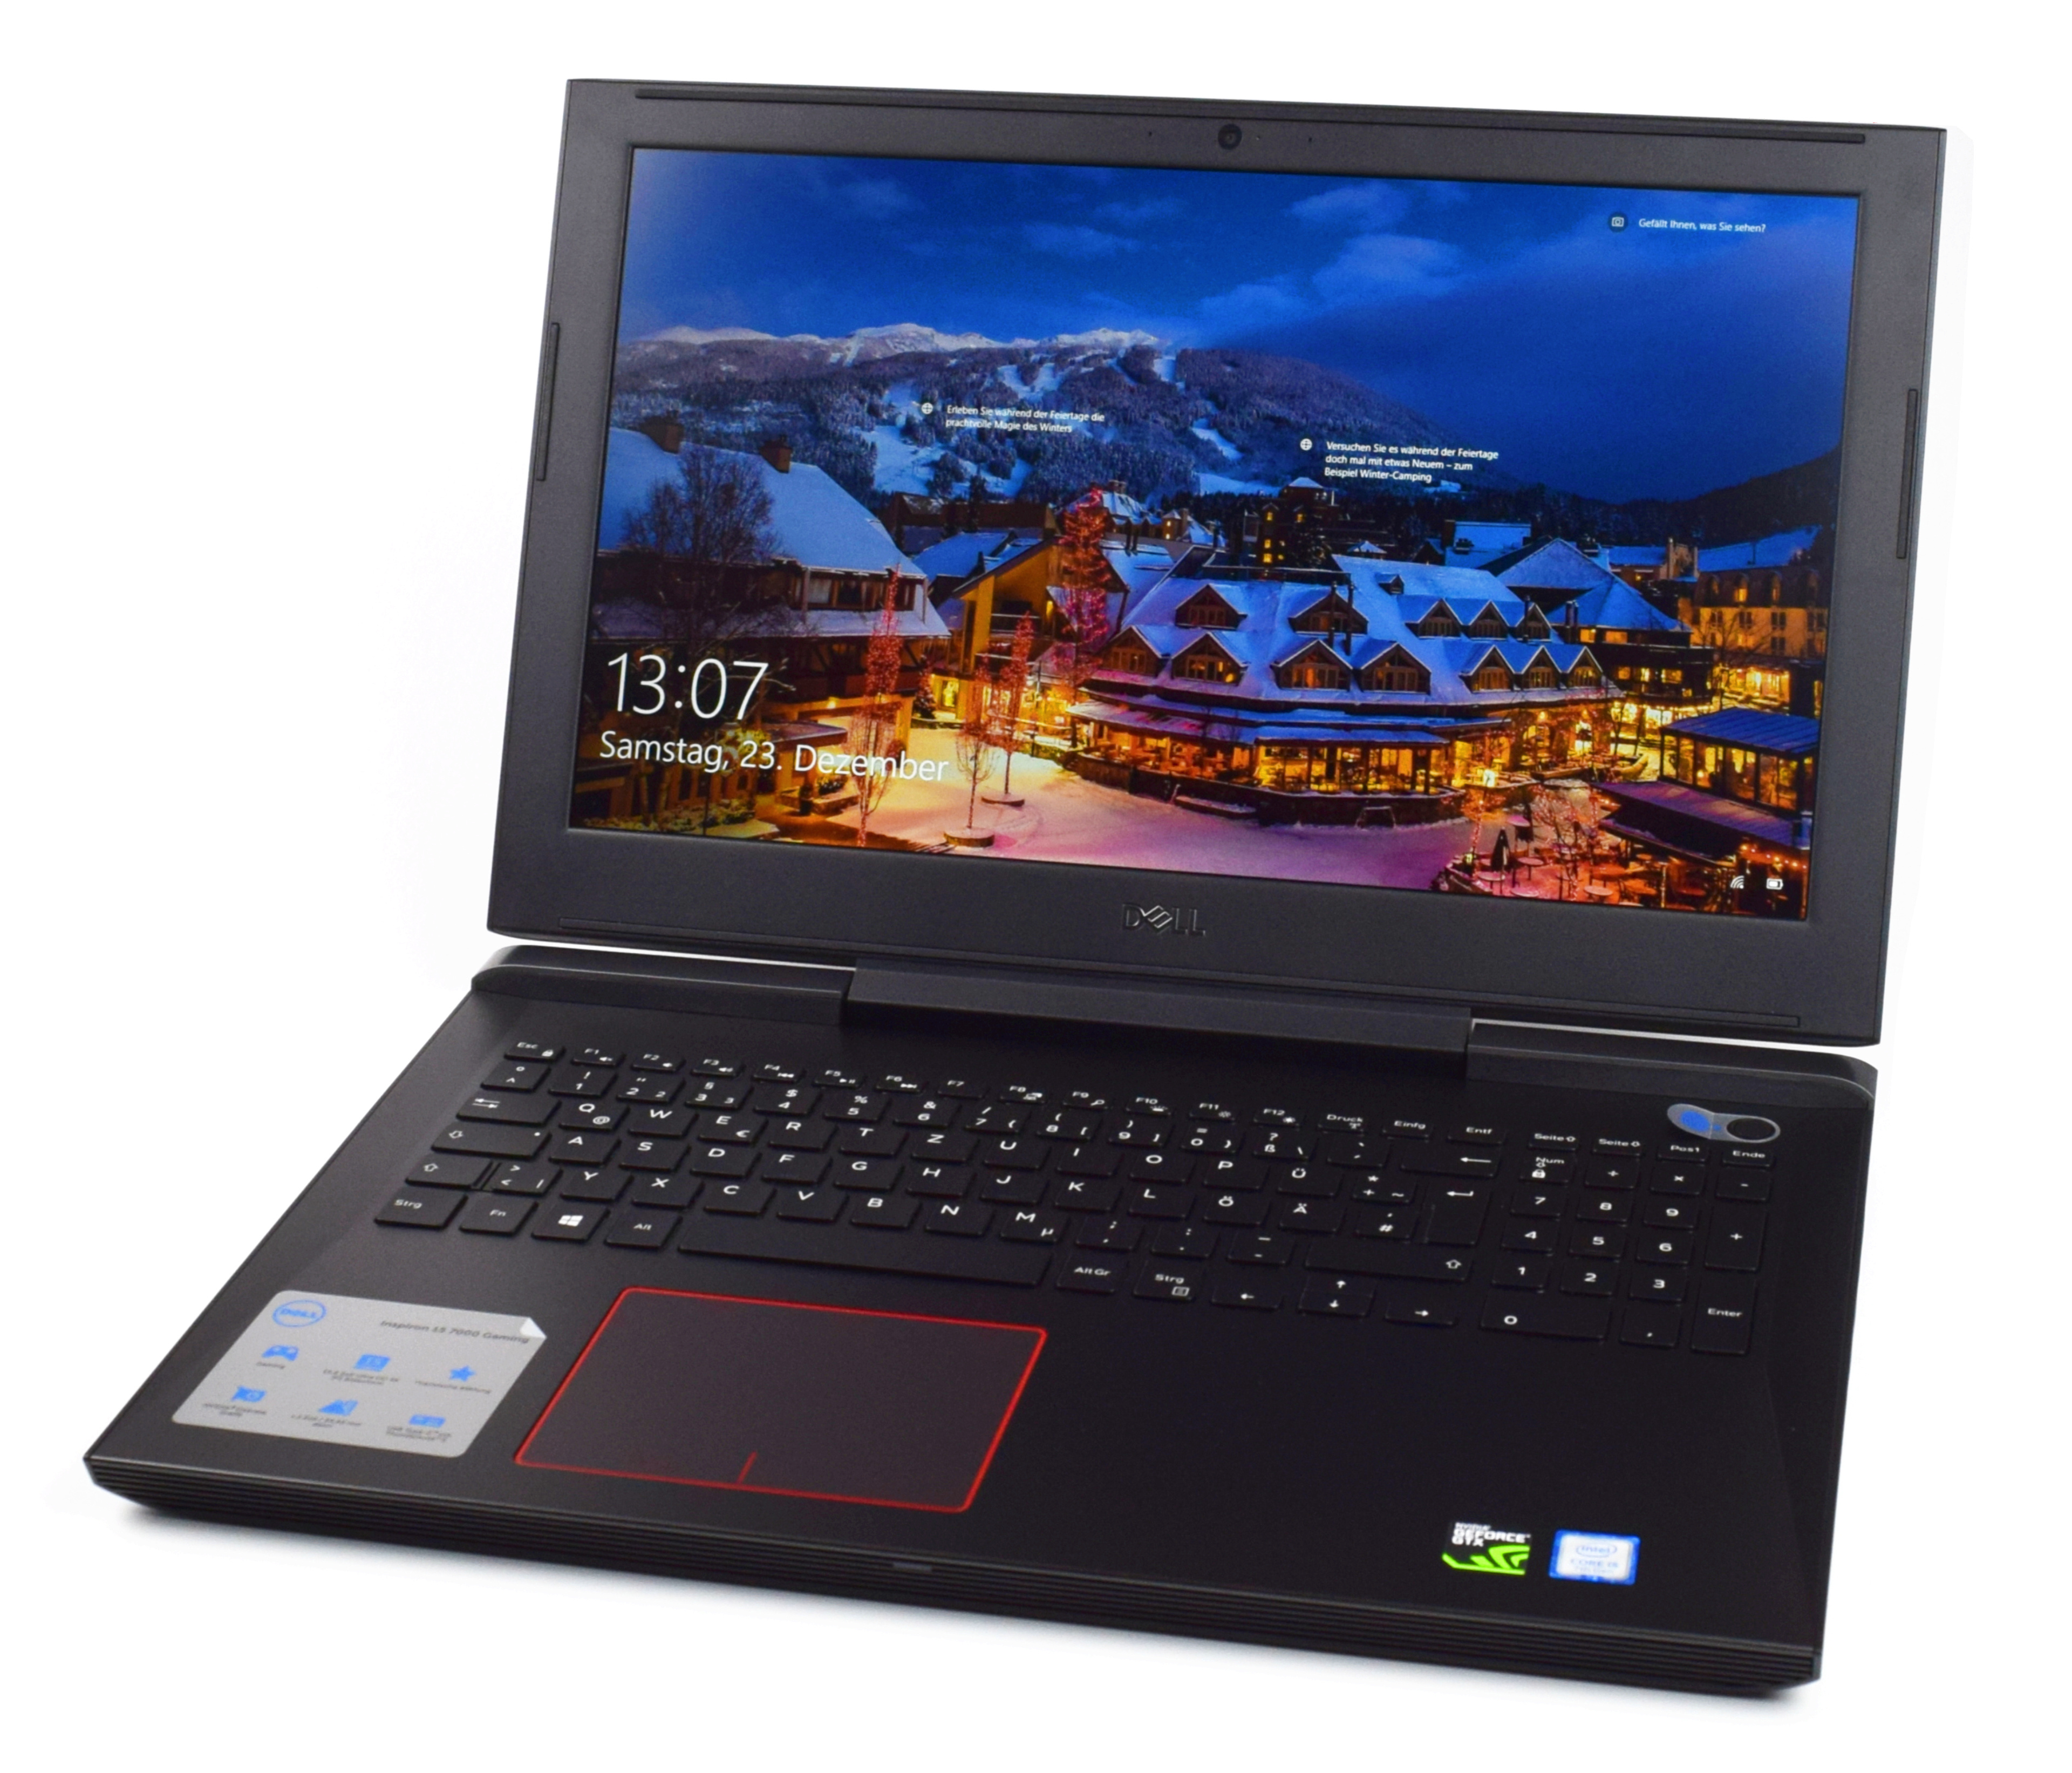 Dell Inspiron 15 7000 7577 (i5-7300HQ, GTX 1050, 1080p) Laptop